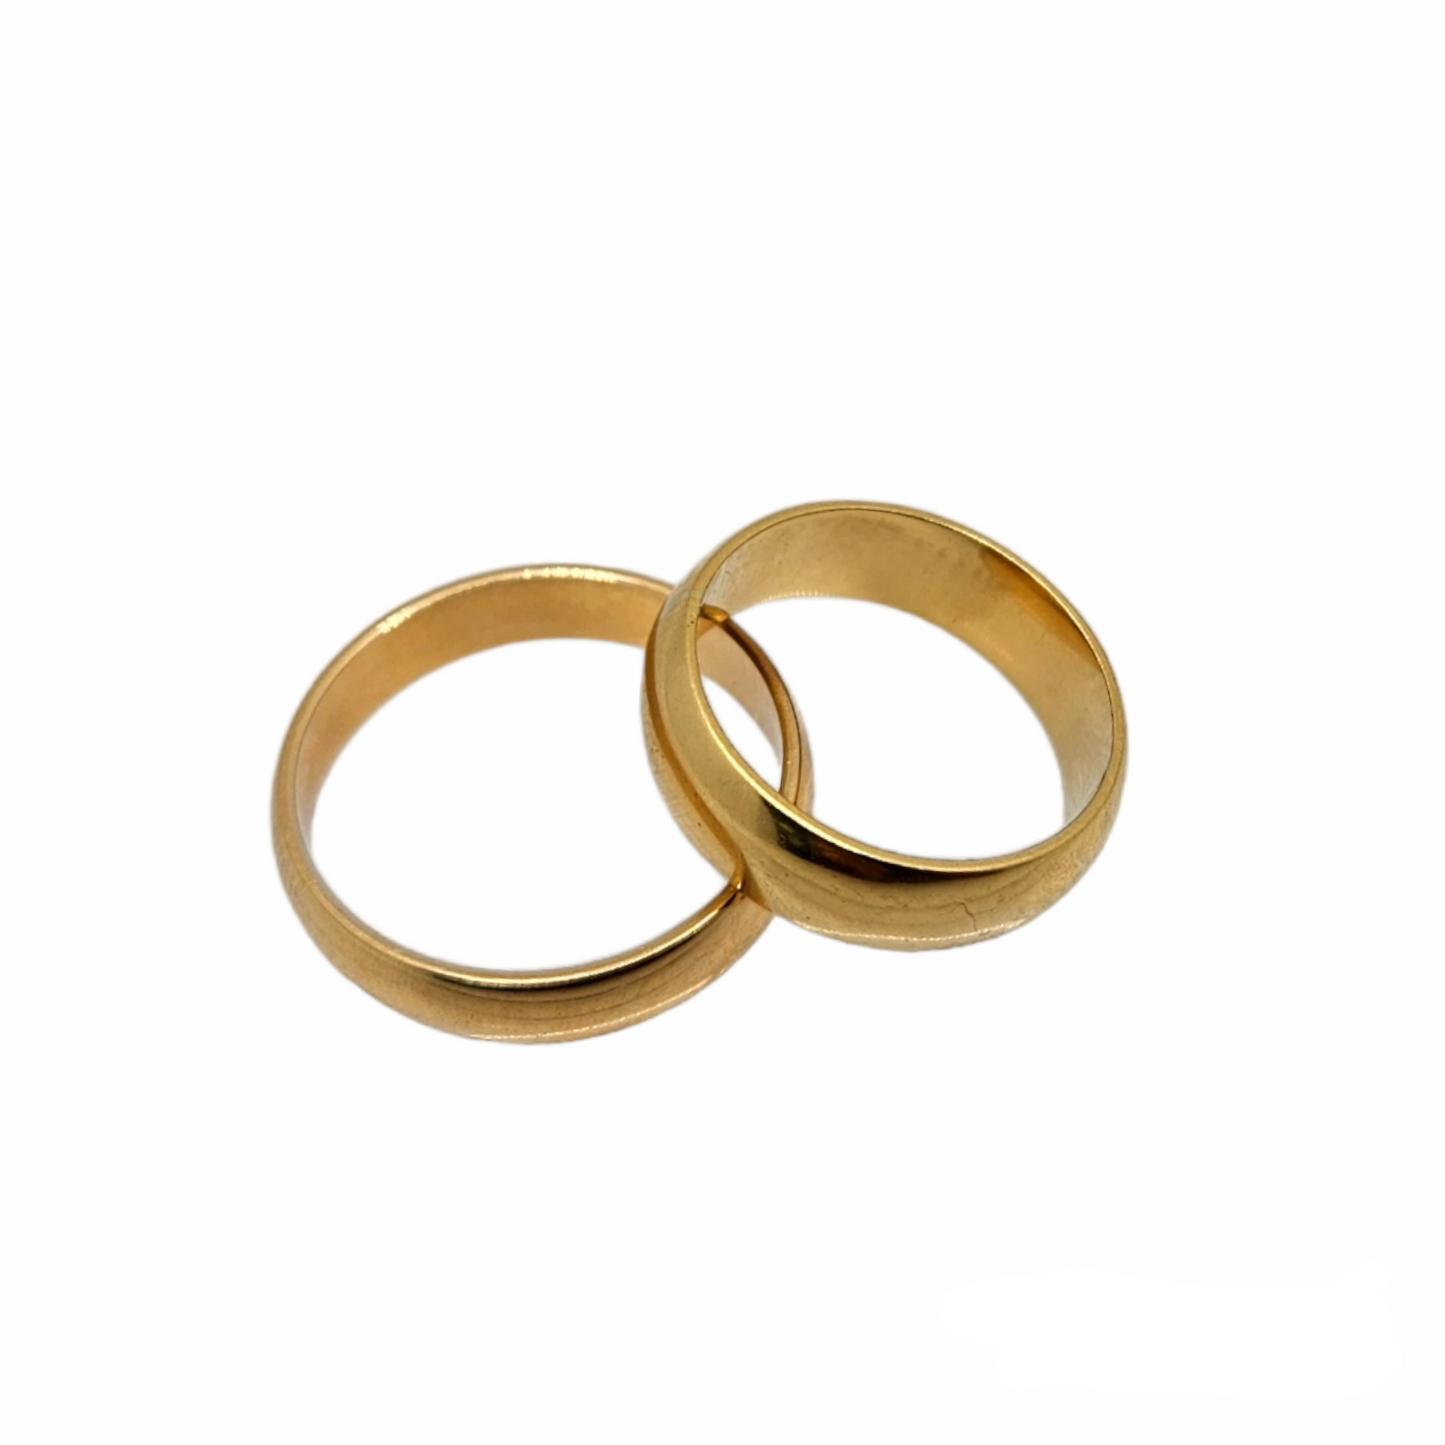 Couple Plain wedding rings